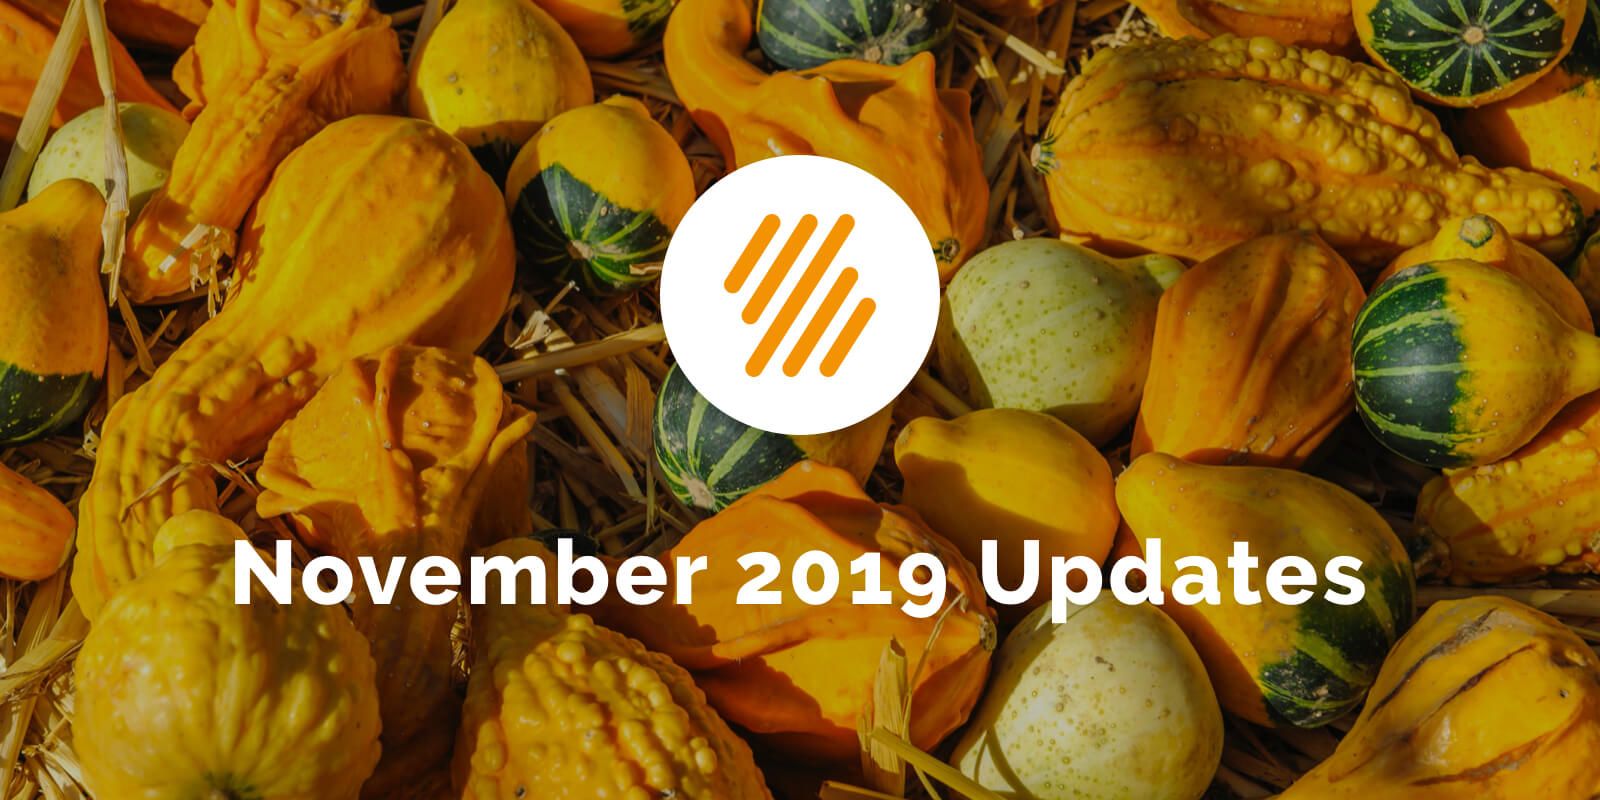 November 2019 Updates